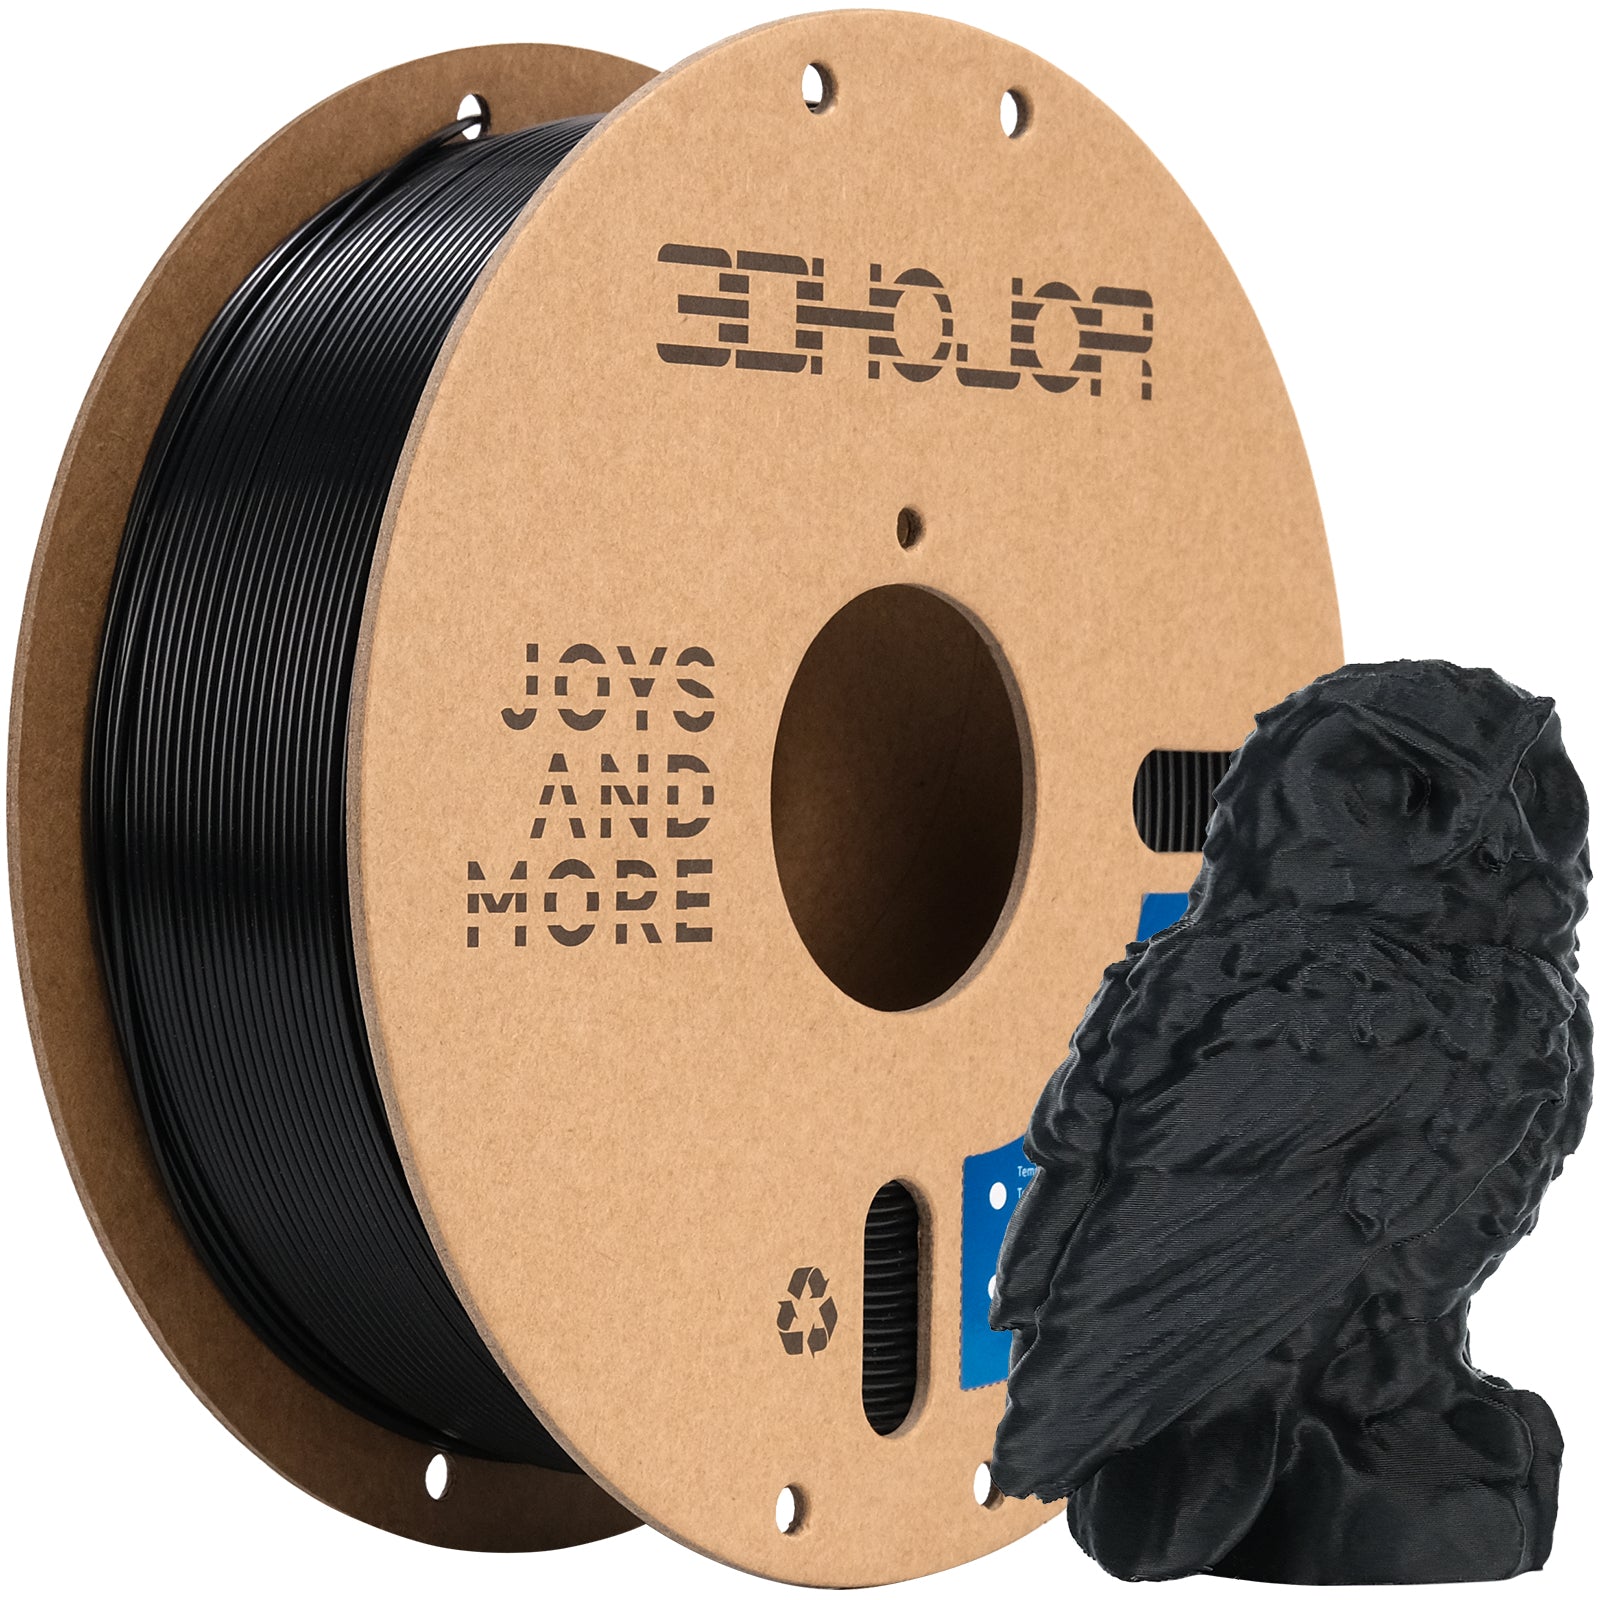 3DHoJor PLA High Speed Printer Filament 1.75mm 1kg Cardboard Spool (2.2lbs) Rapid PLA to 5X Faster Printing Filament PLA Dimensional Accuracy +/- 0.02 mm Fits for Most FDM 3D Printer -Black